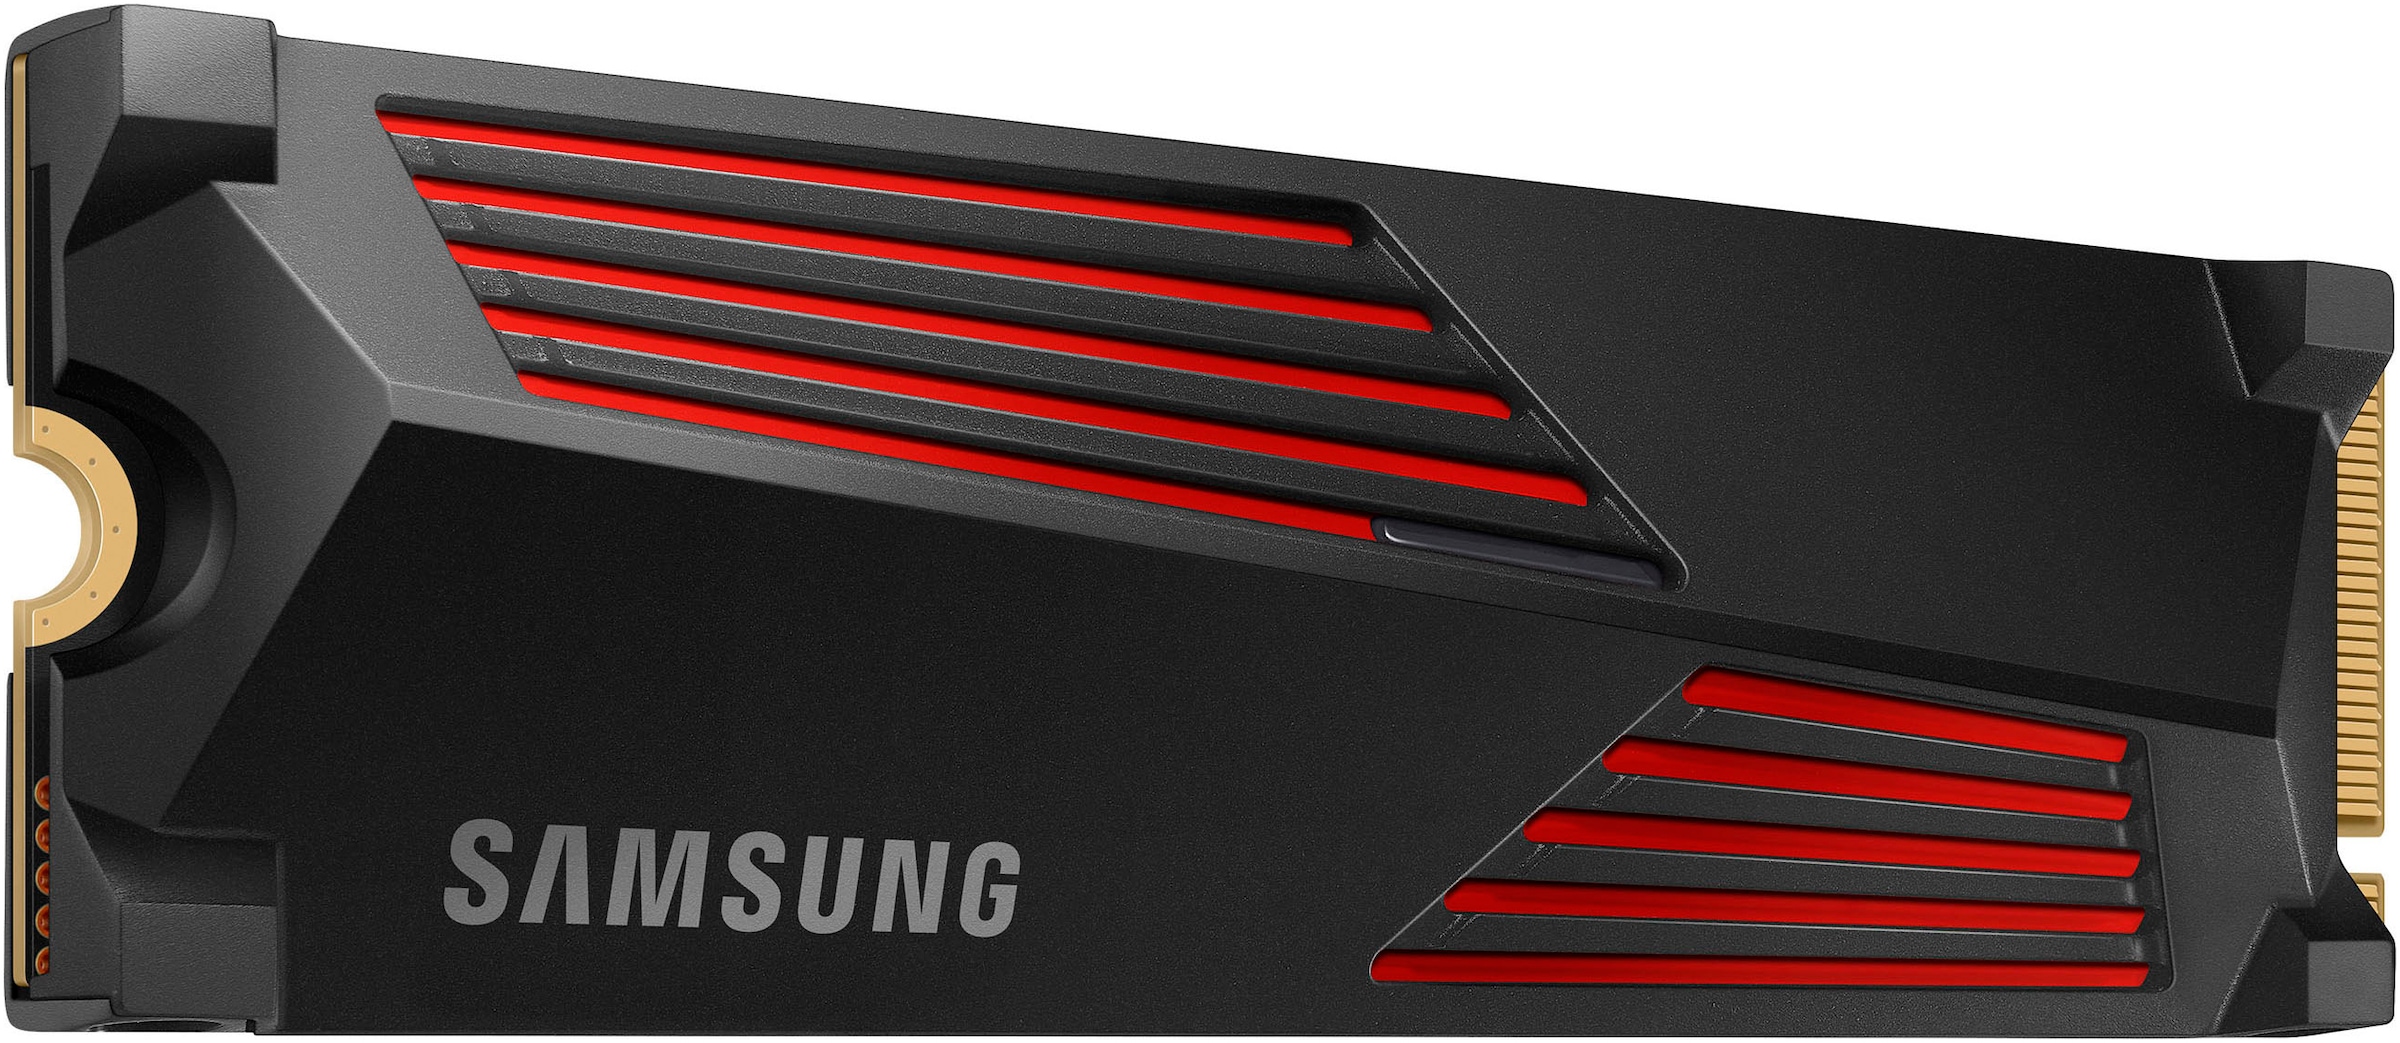 Samsung interne SSD »990 PRO Heatsink 4TB«, Anschluss PCI Express 4.0